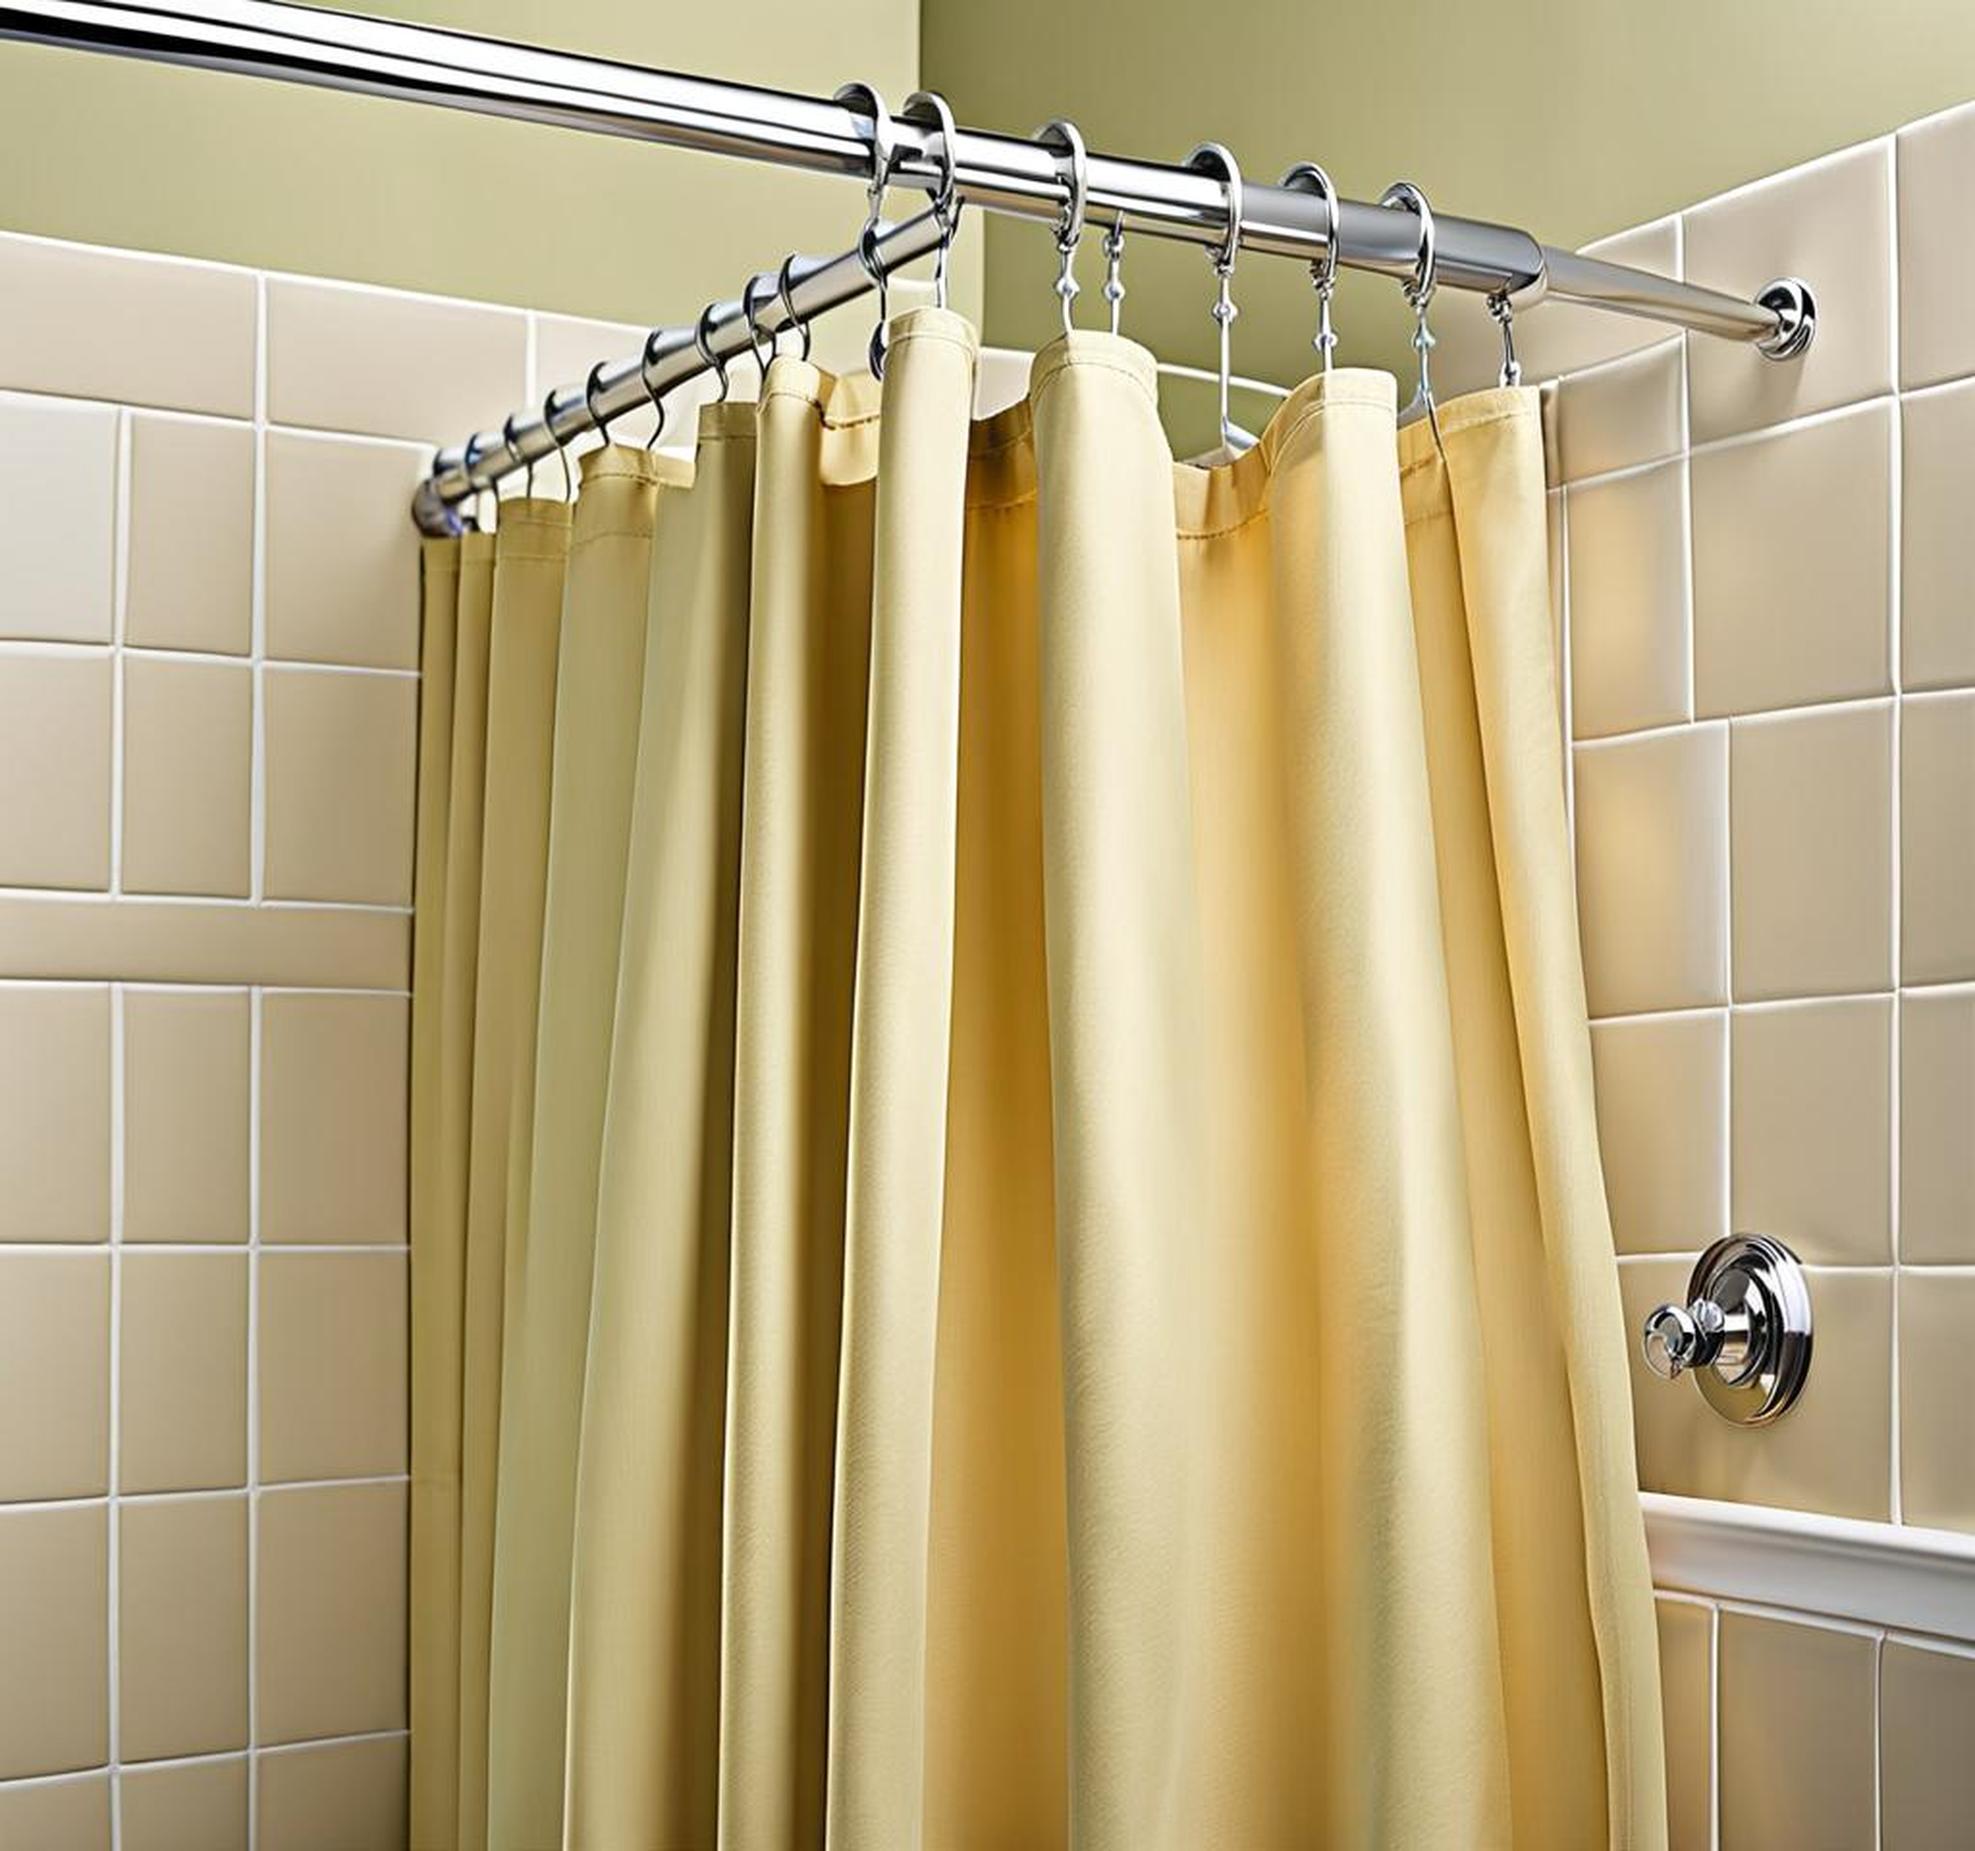 garden tub shower curtain rod